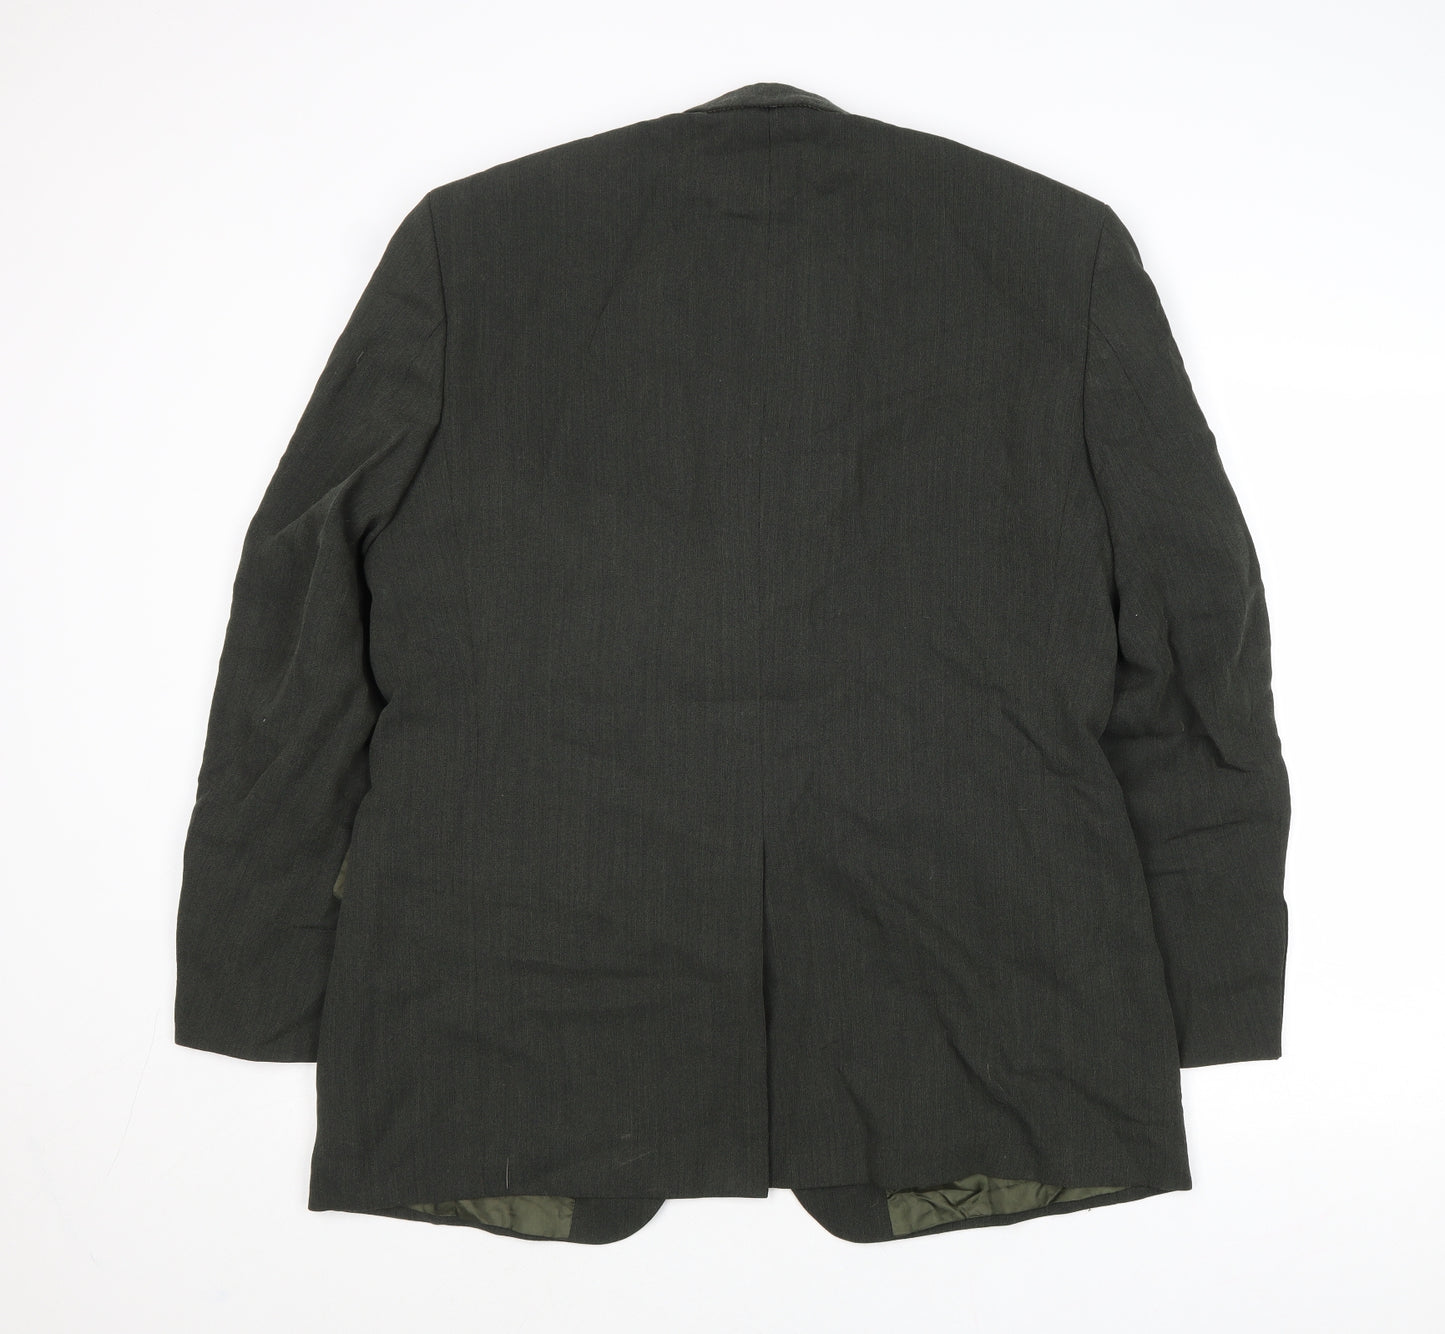 Principles Mens Green Wool Jacket Suit Jacket Size 42 Regular